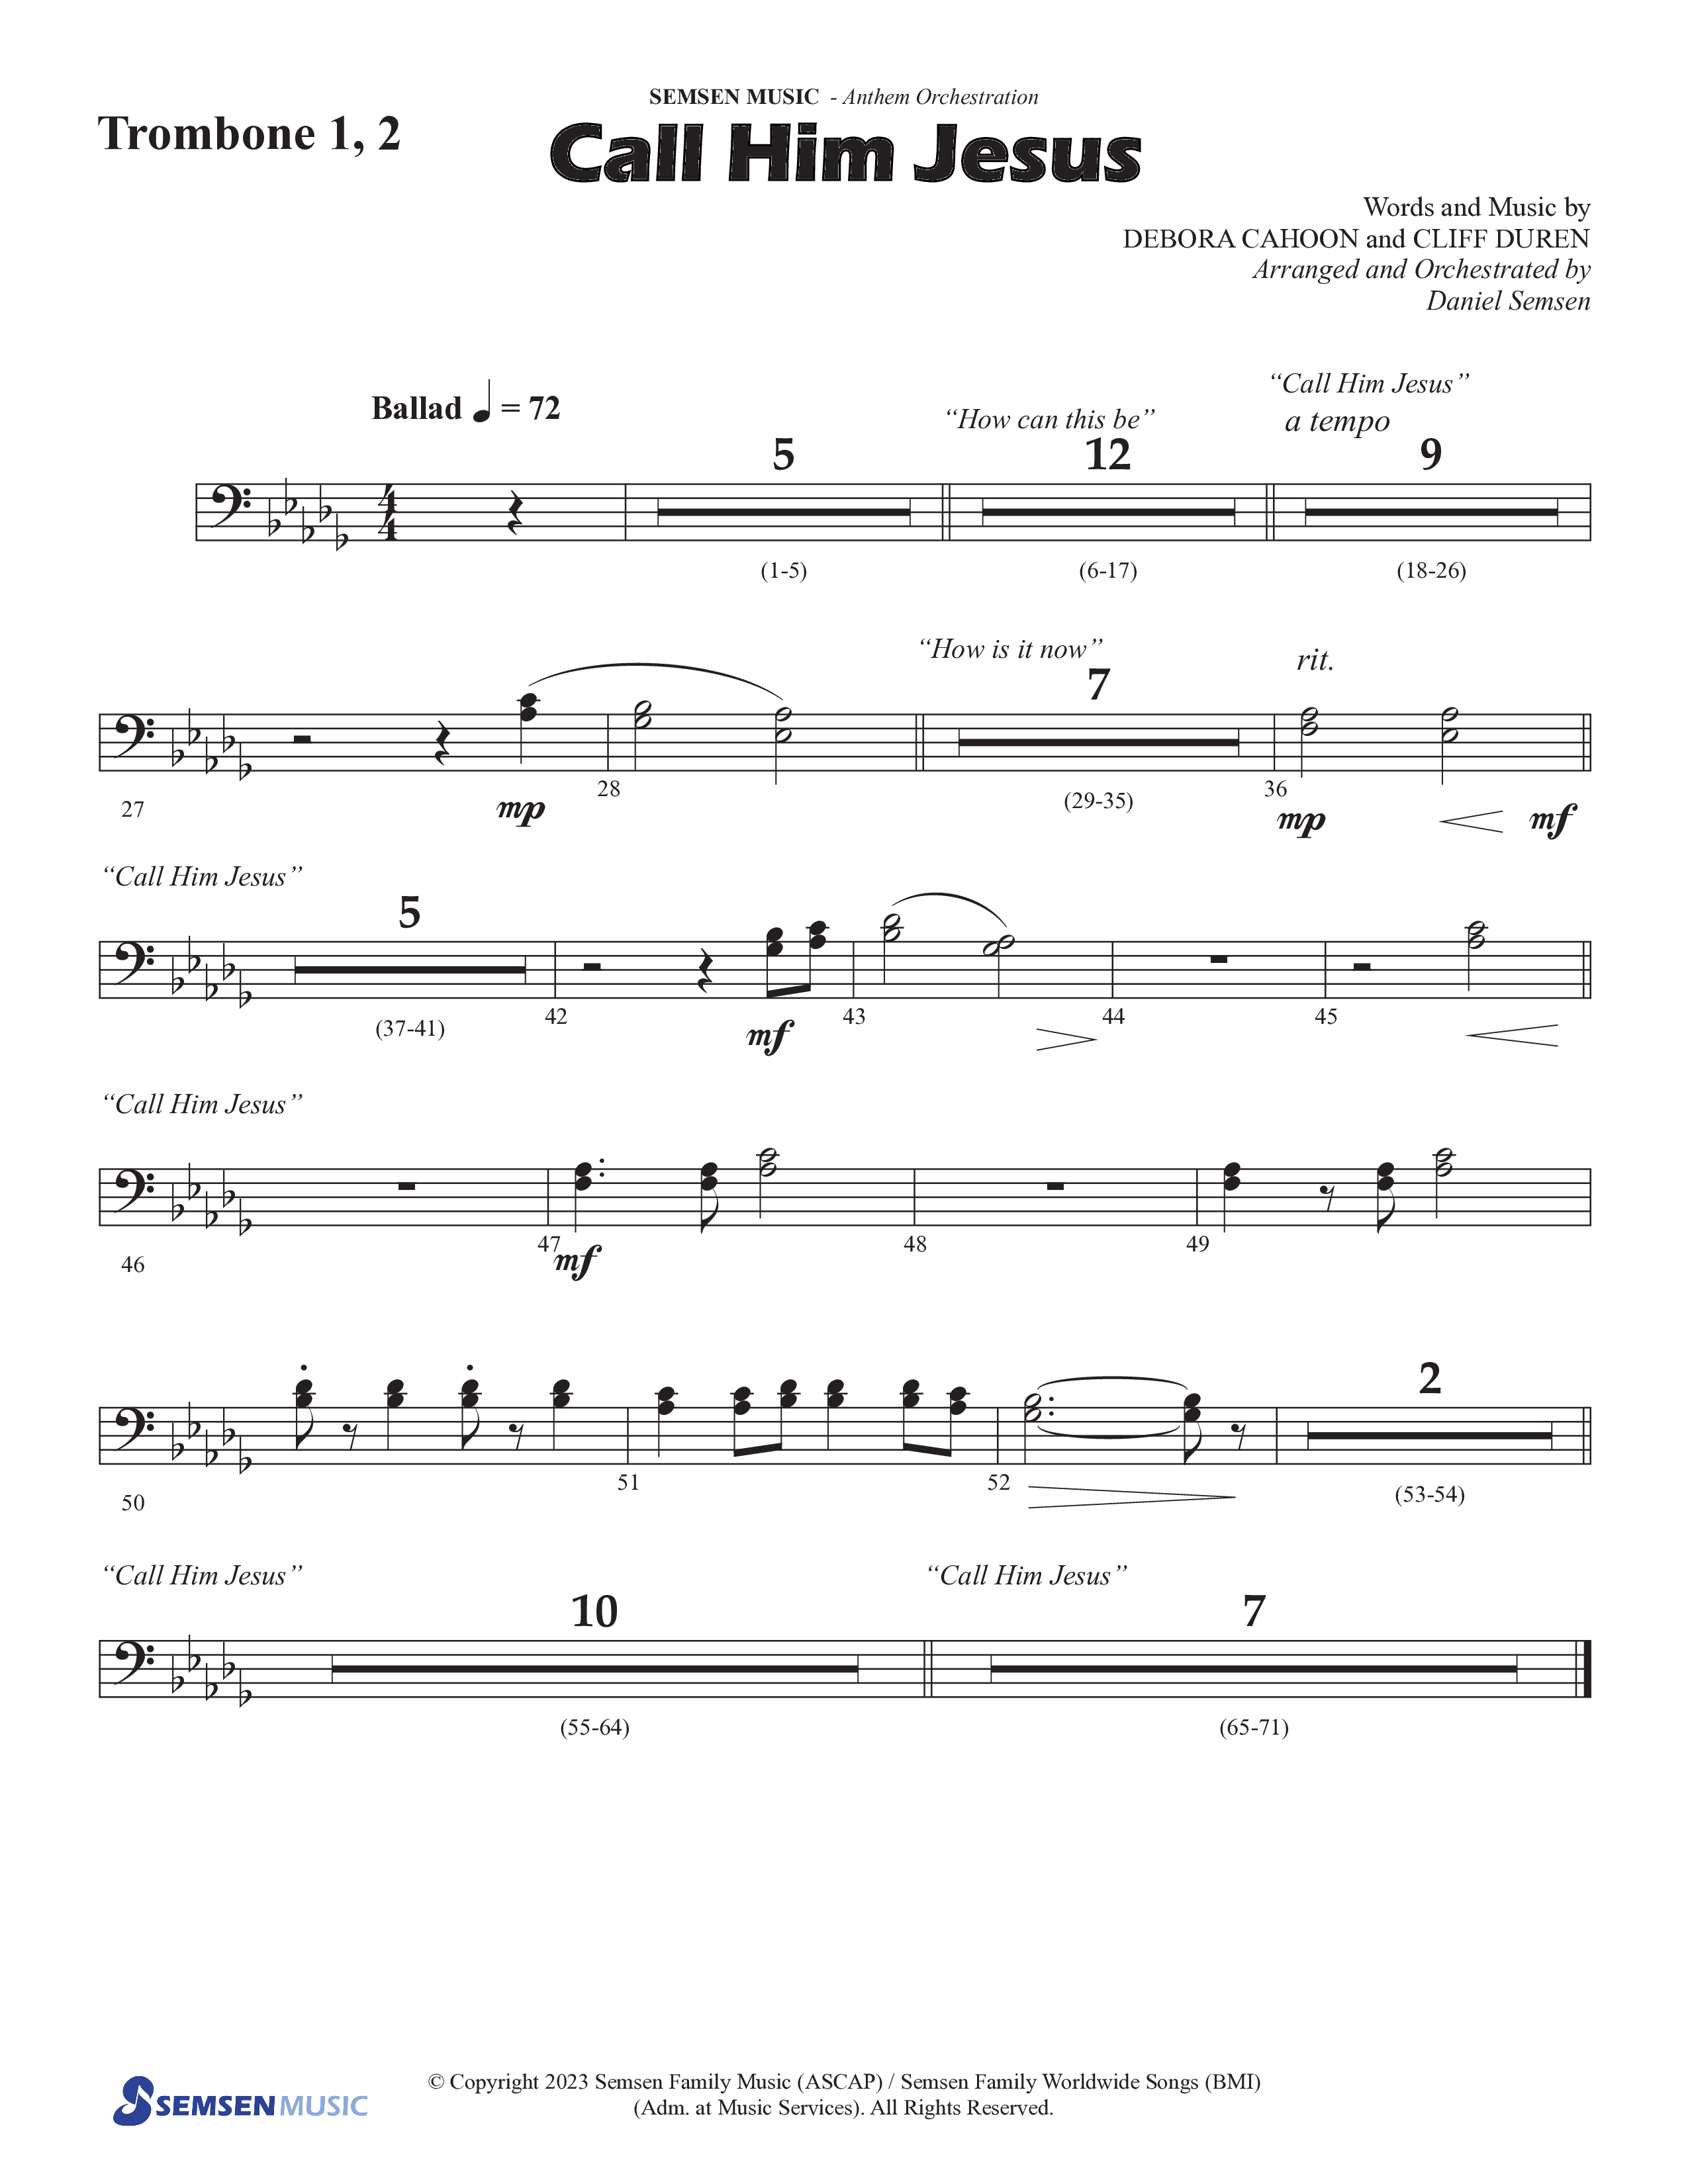 Call Him Jesus (Choral Anthem SATB) Trombone 1/2 (Semsen Music / Arr. Daniel Semsen)